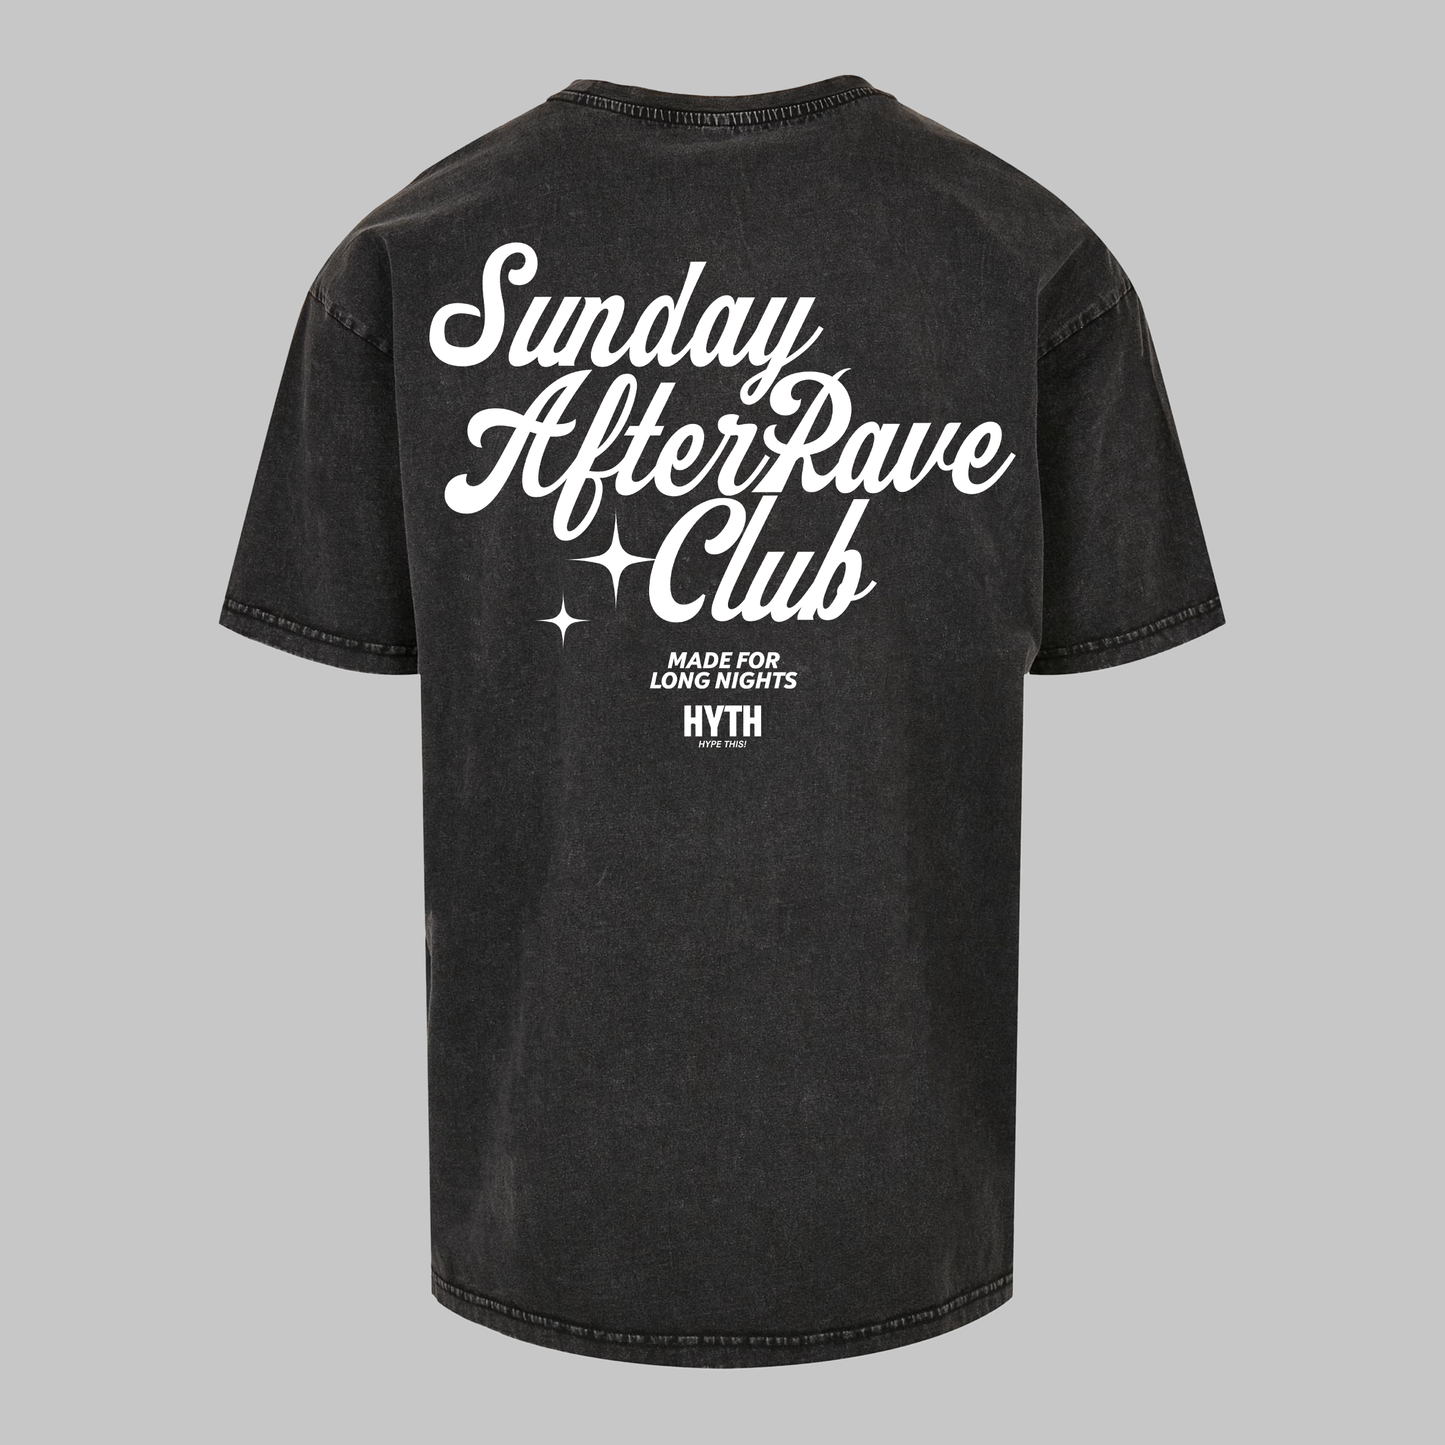 HYTH - Sunday After Hour Rave Club  - Shirt - Schwarz